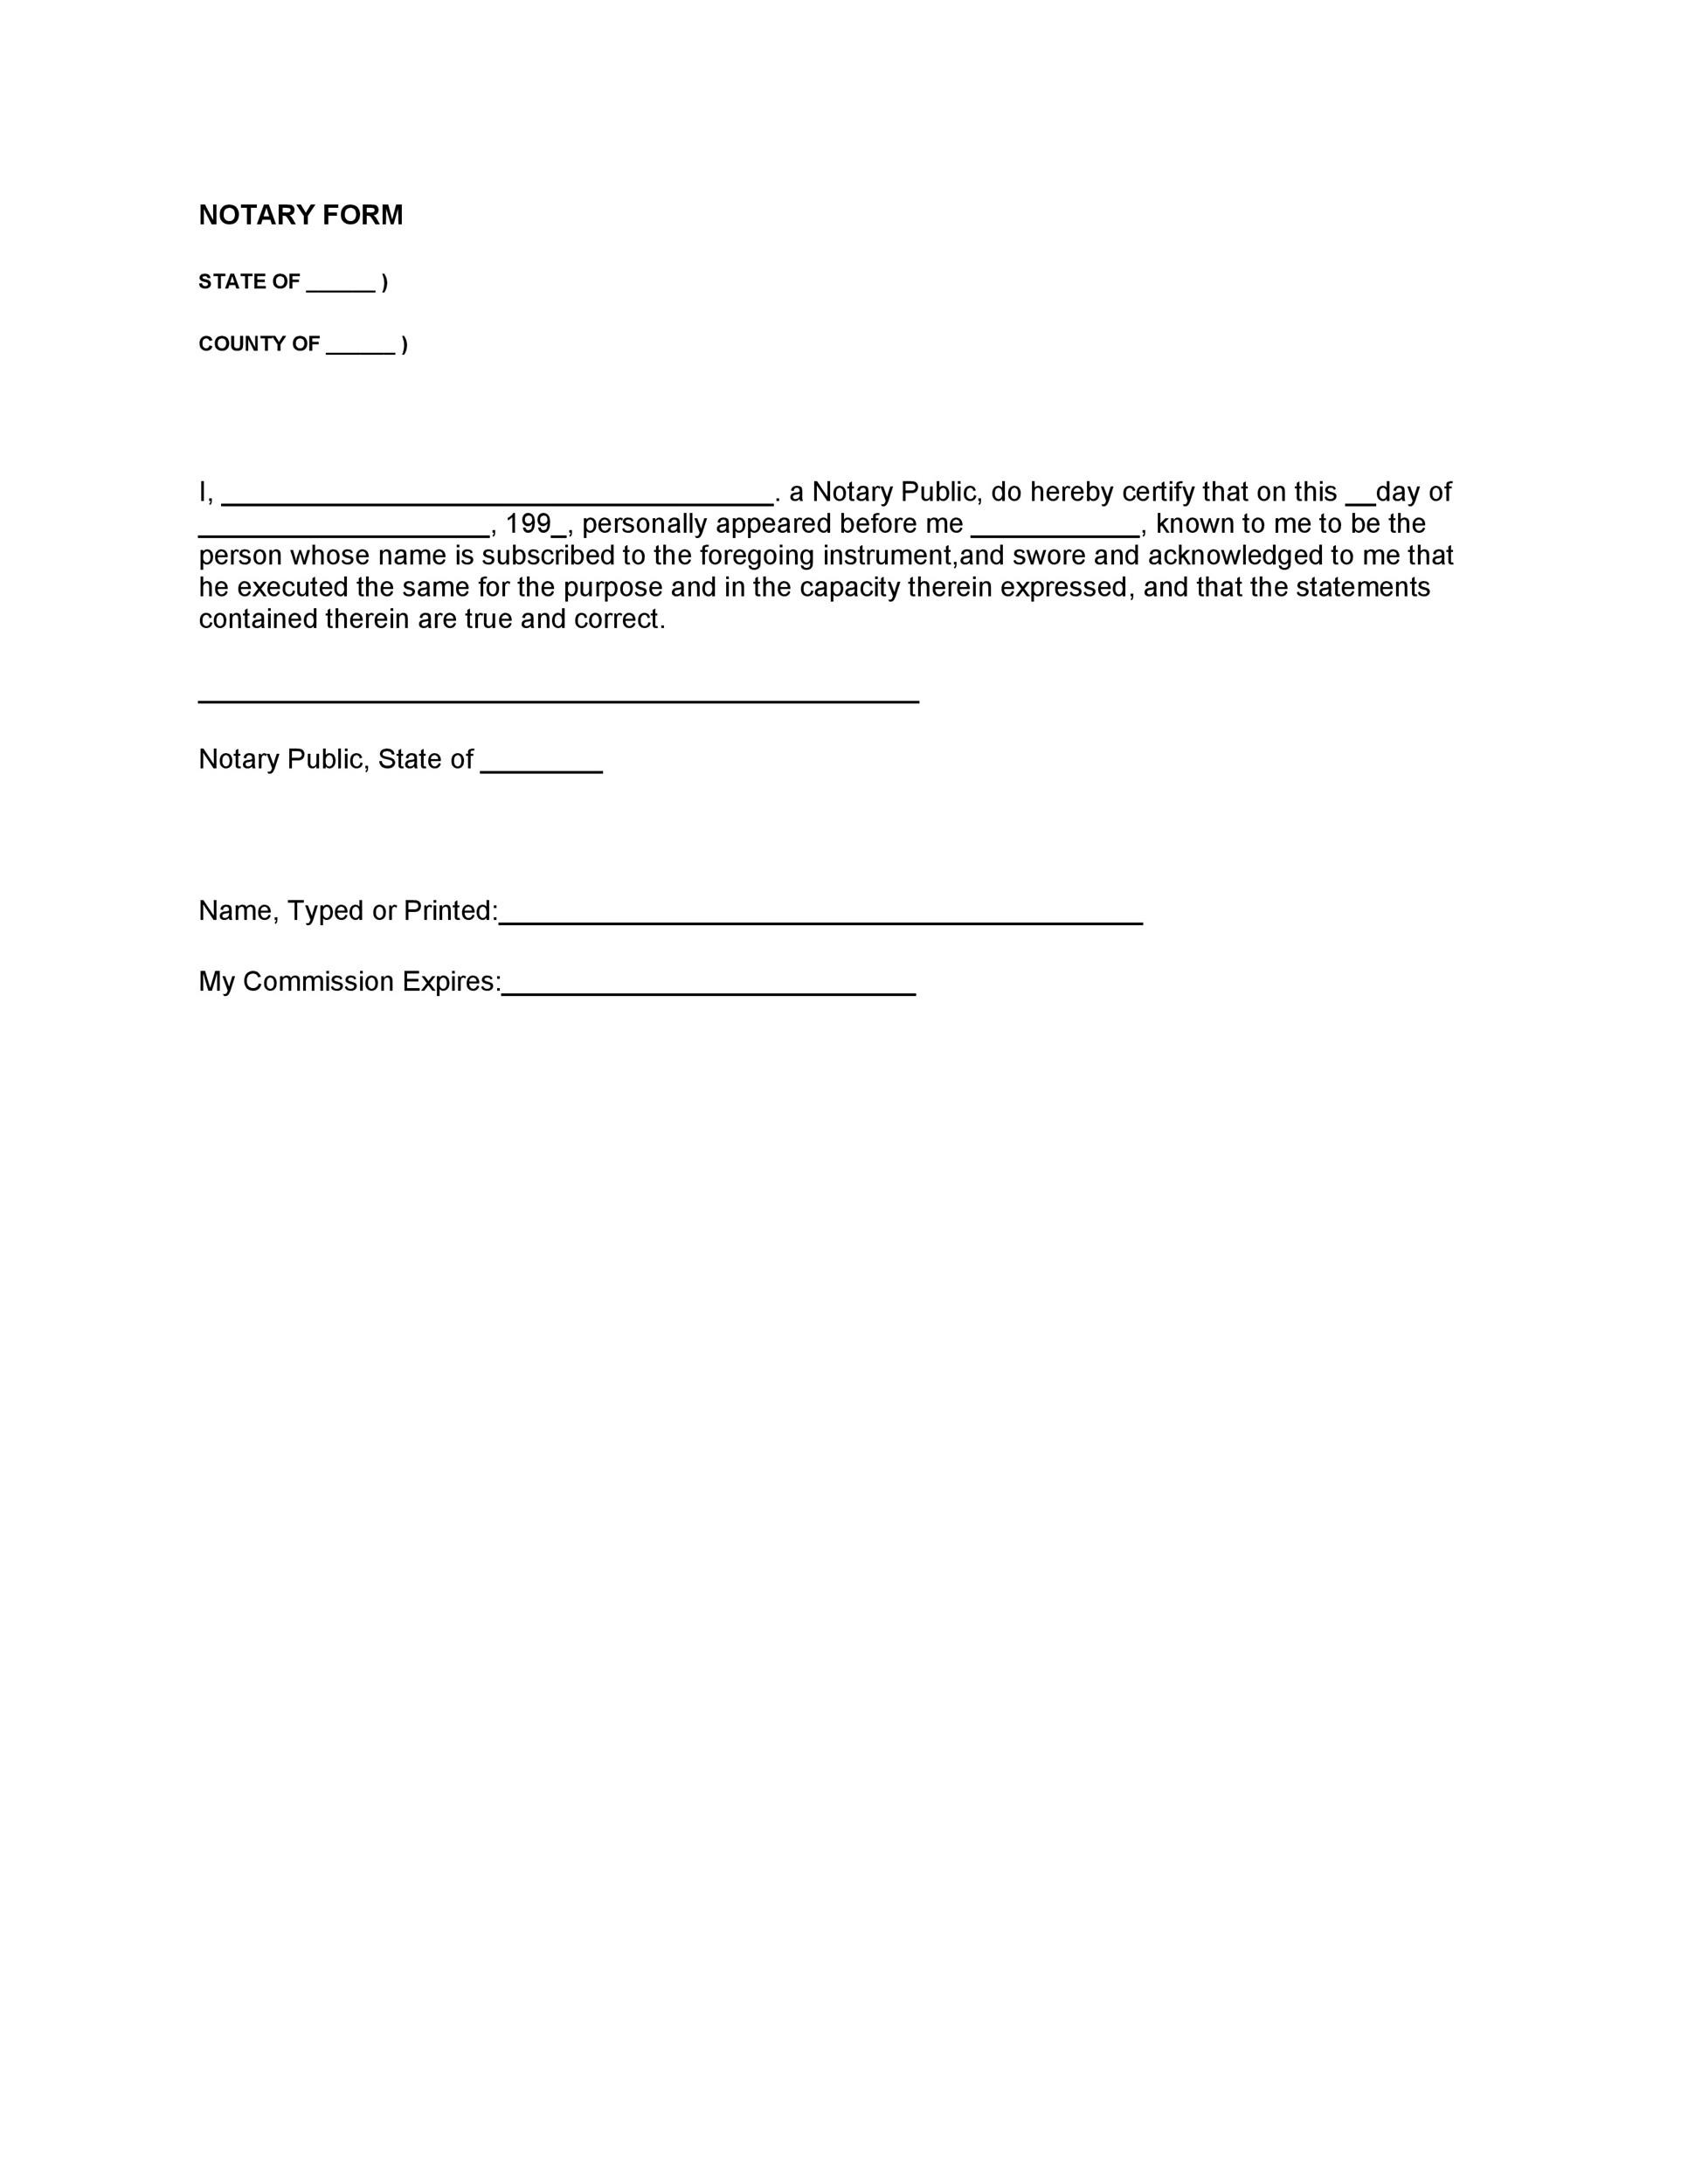 acknowledgement-notary-block